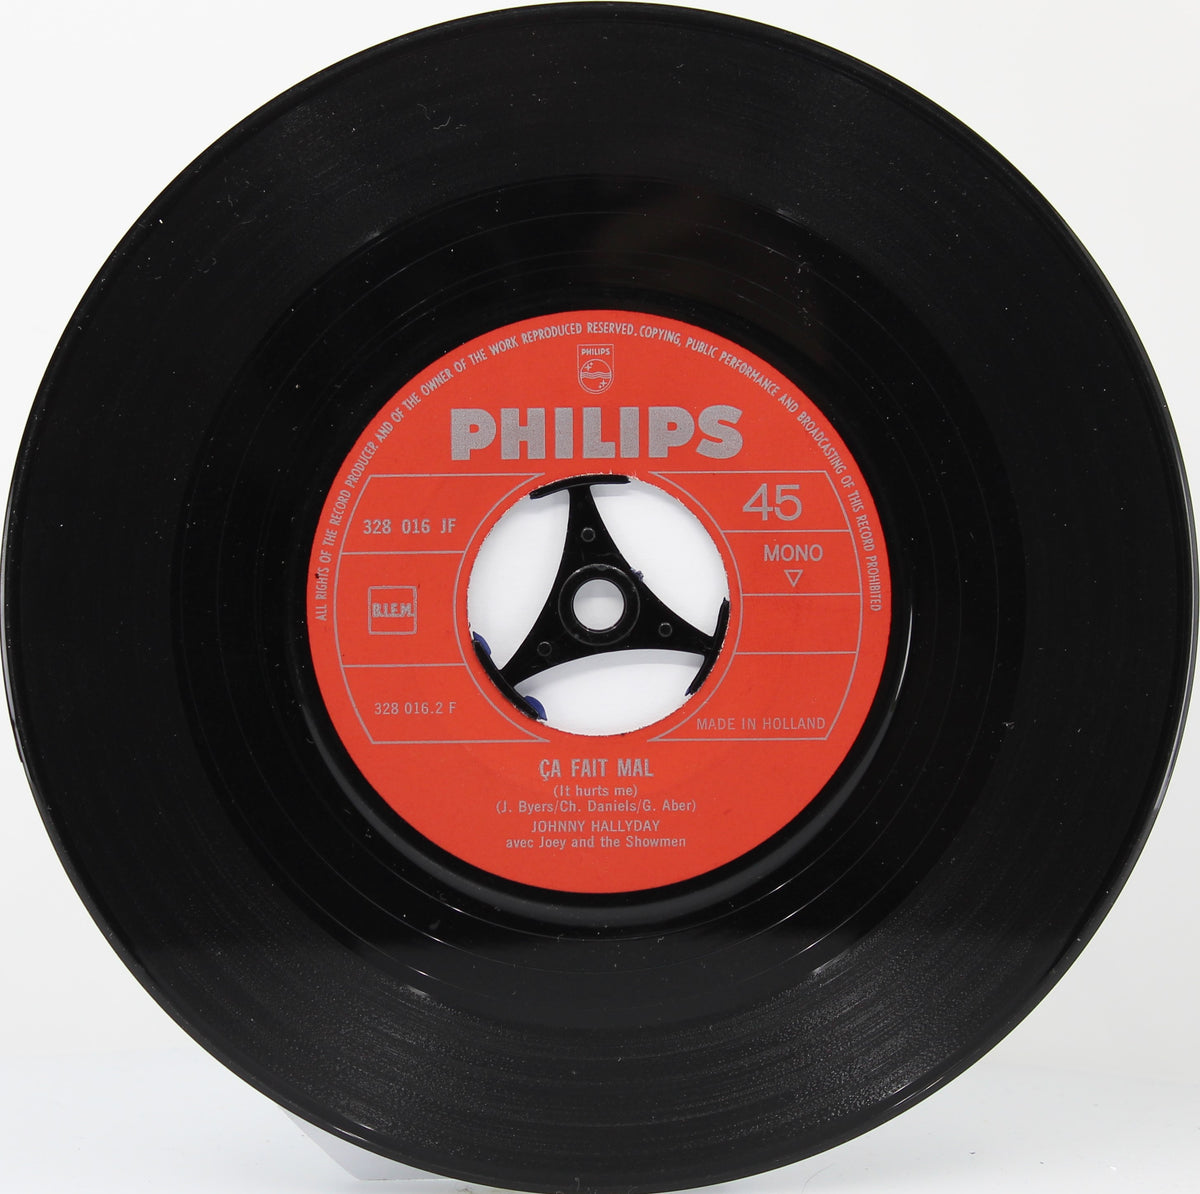 Johnny Hallyday – Les Mauvais Garçons, Vinyl, 7&quot;, 45 RPM, Single, Netherlands 1964